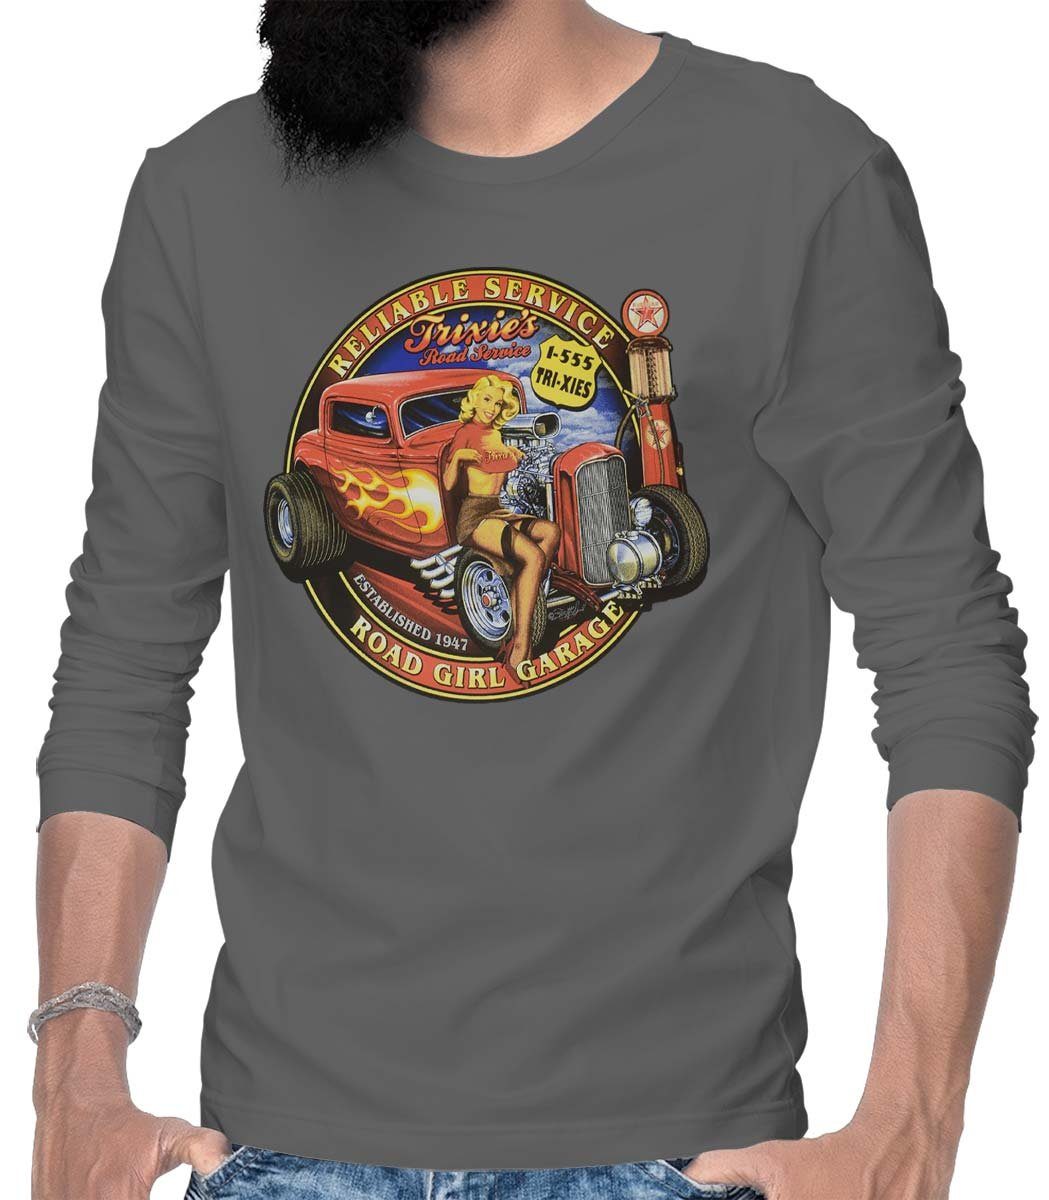 Longsleeve Rebel Grau Langarm T-Shirt Herren Trixies / On Tee mit Longsleeve Hotrod Wheels Roadservice US-Car Motiv